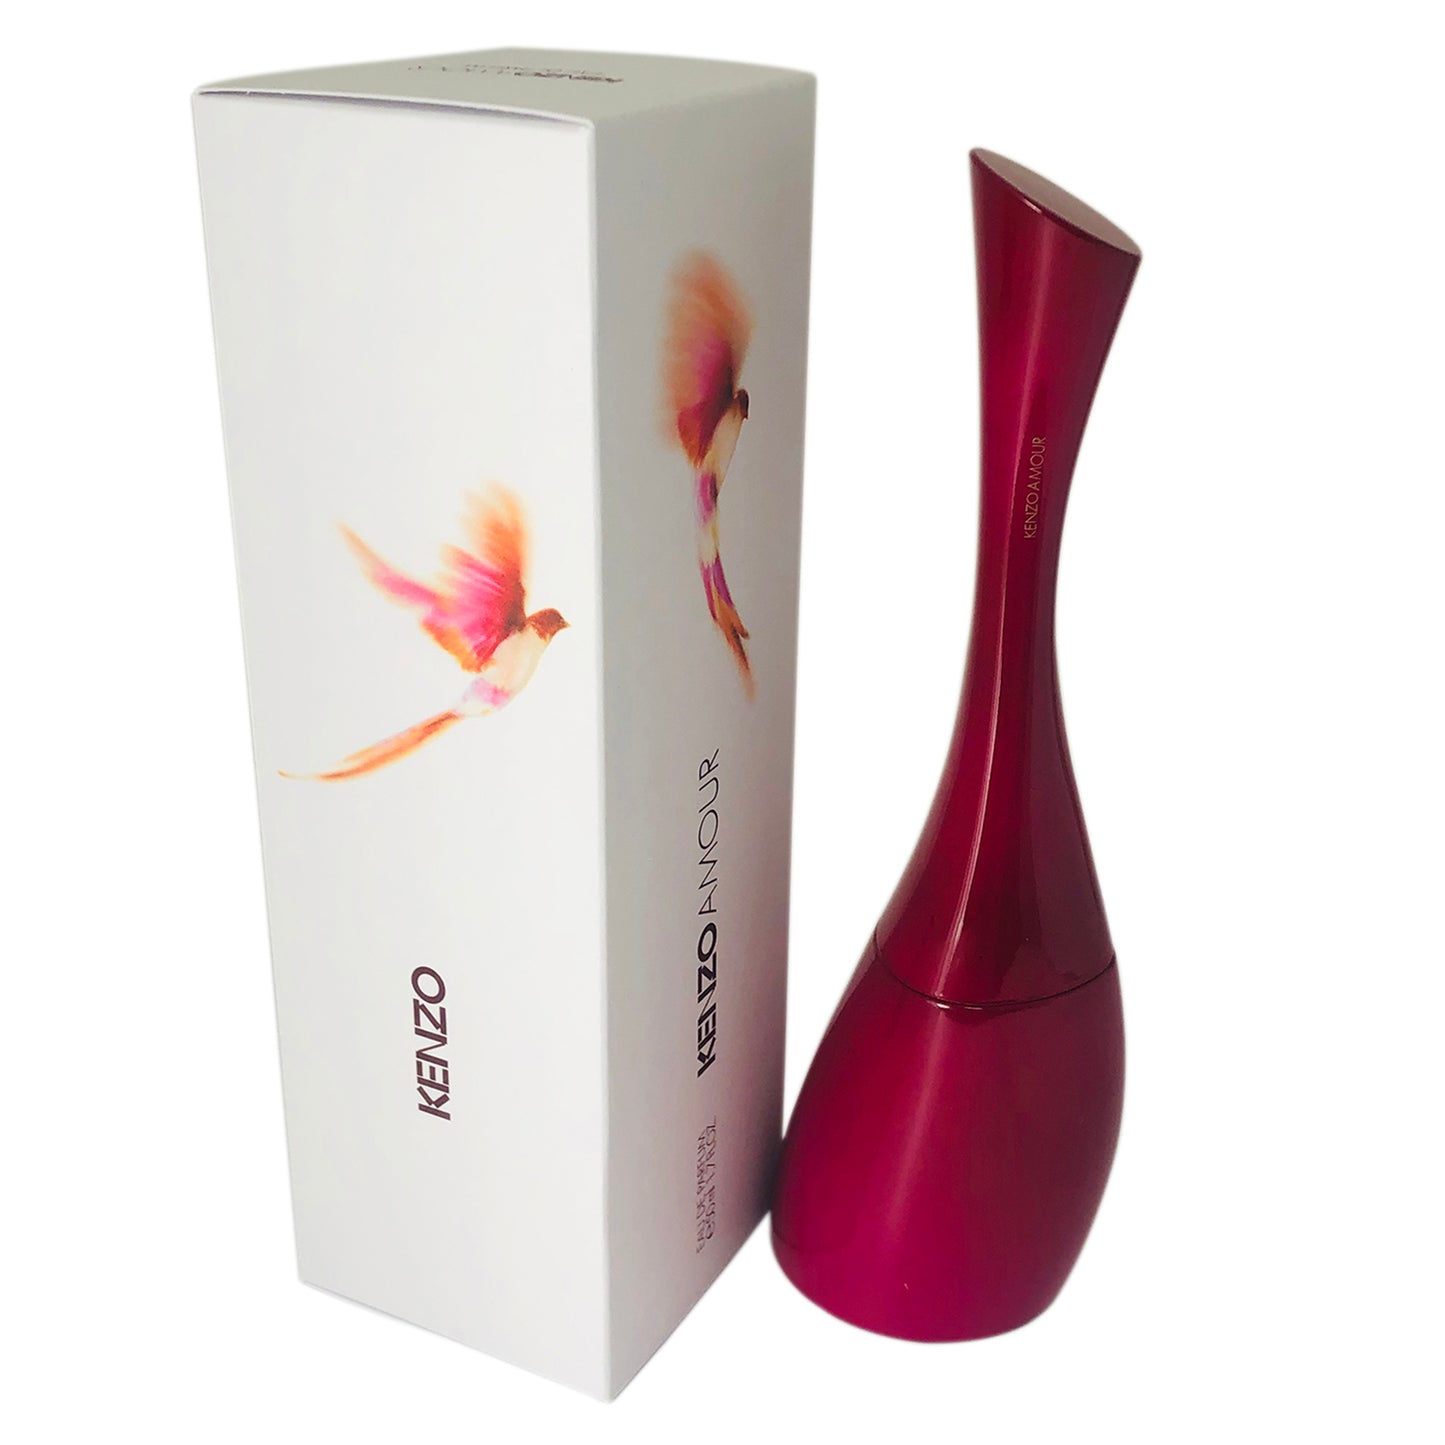 Kenzo Amour for Women by Kenzo 1.7 oz Eau de Parfum Spray